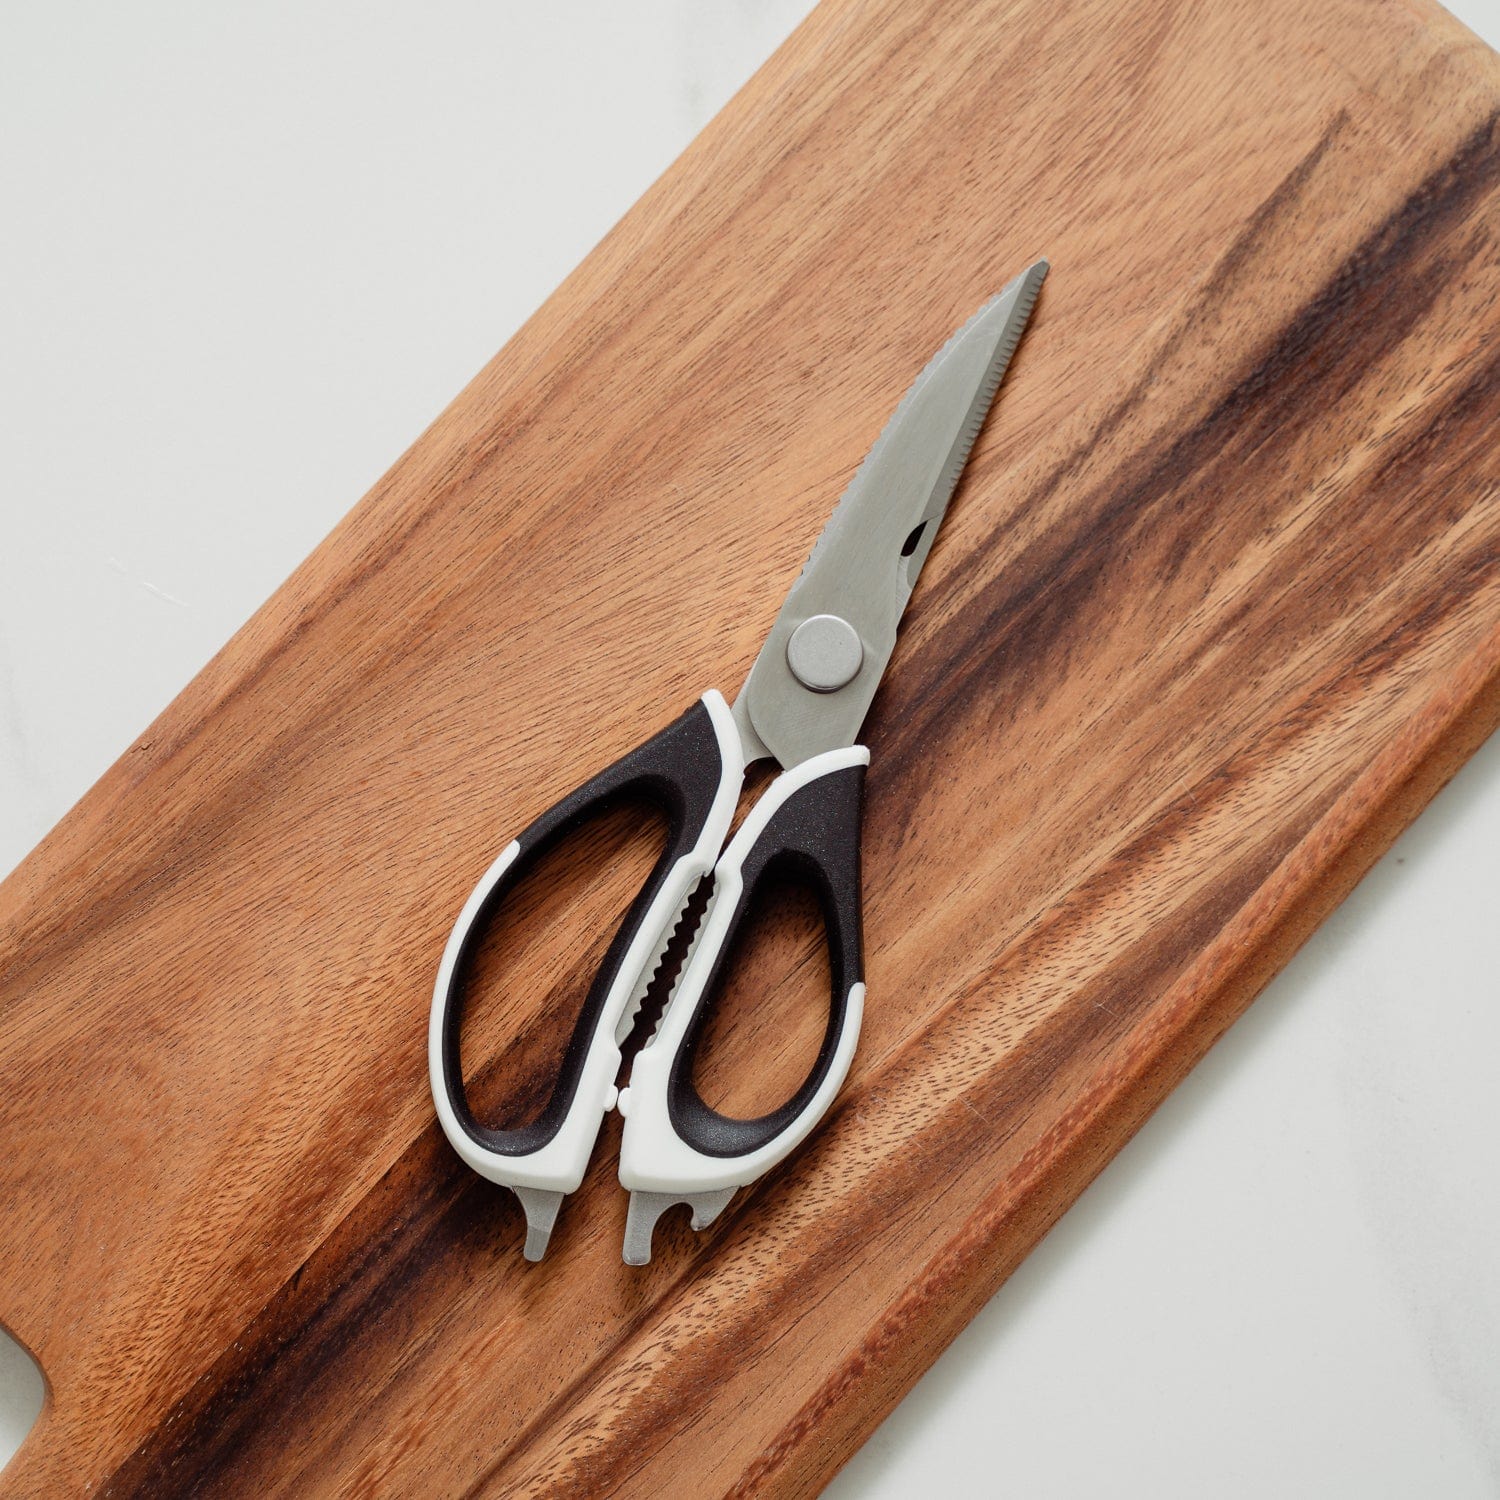 COOK EASY Homewares Multipurpose Kitchen Scissors, Super Scissors, Stainless Steel Blades